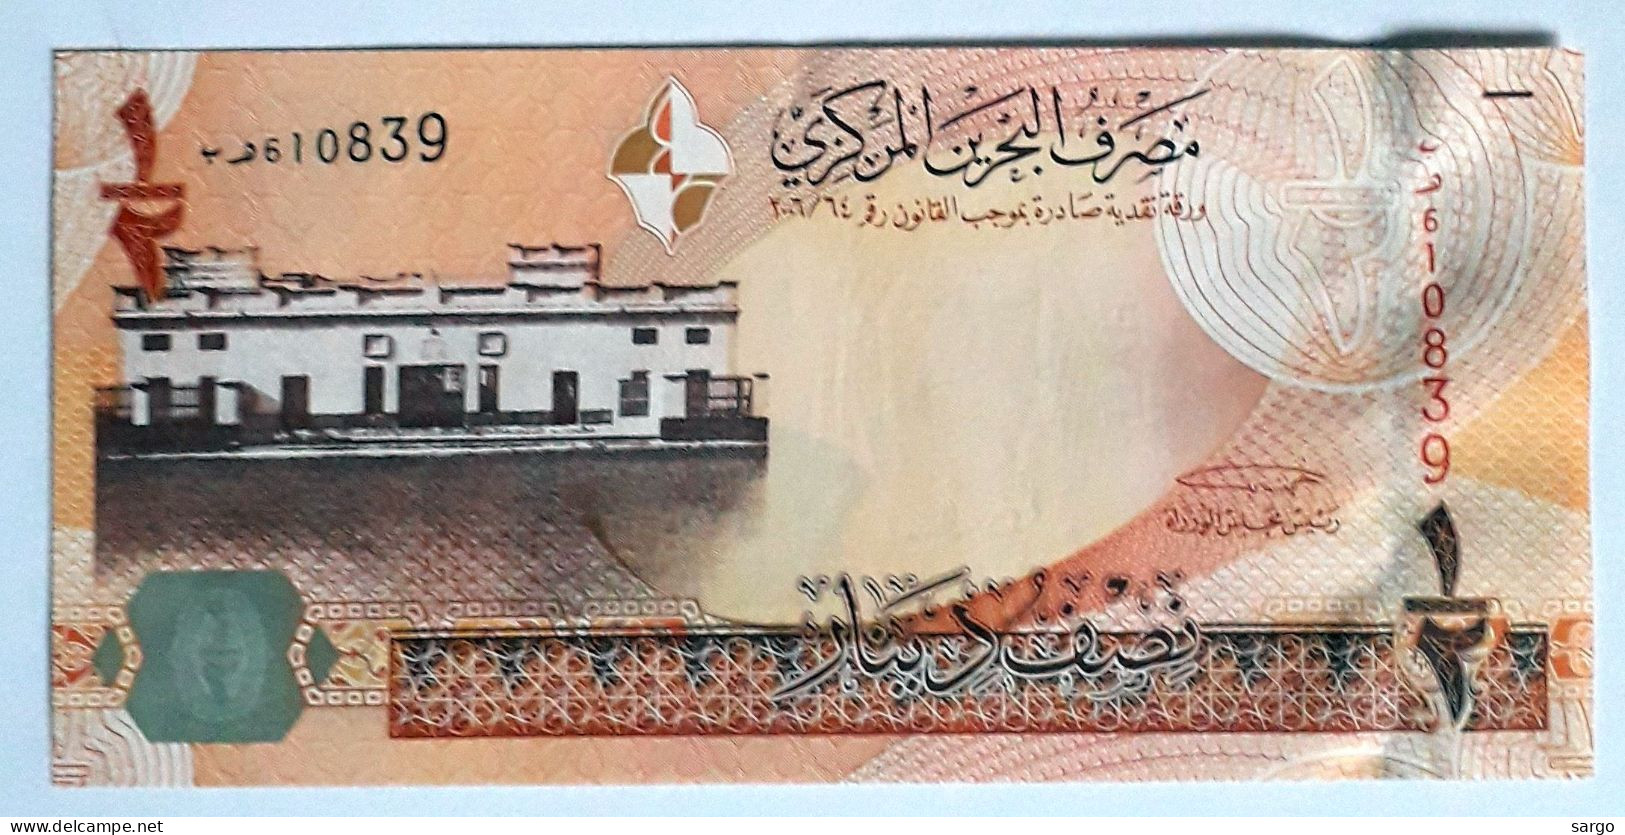 BAHRAIN  - 1/2 DINAR - P  25  (2006) - UNC - BANKNOTES - PAPER MONEY - CARTAMONETA - - Bahrein